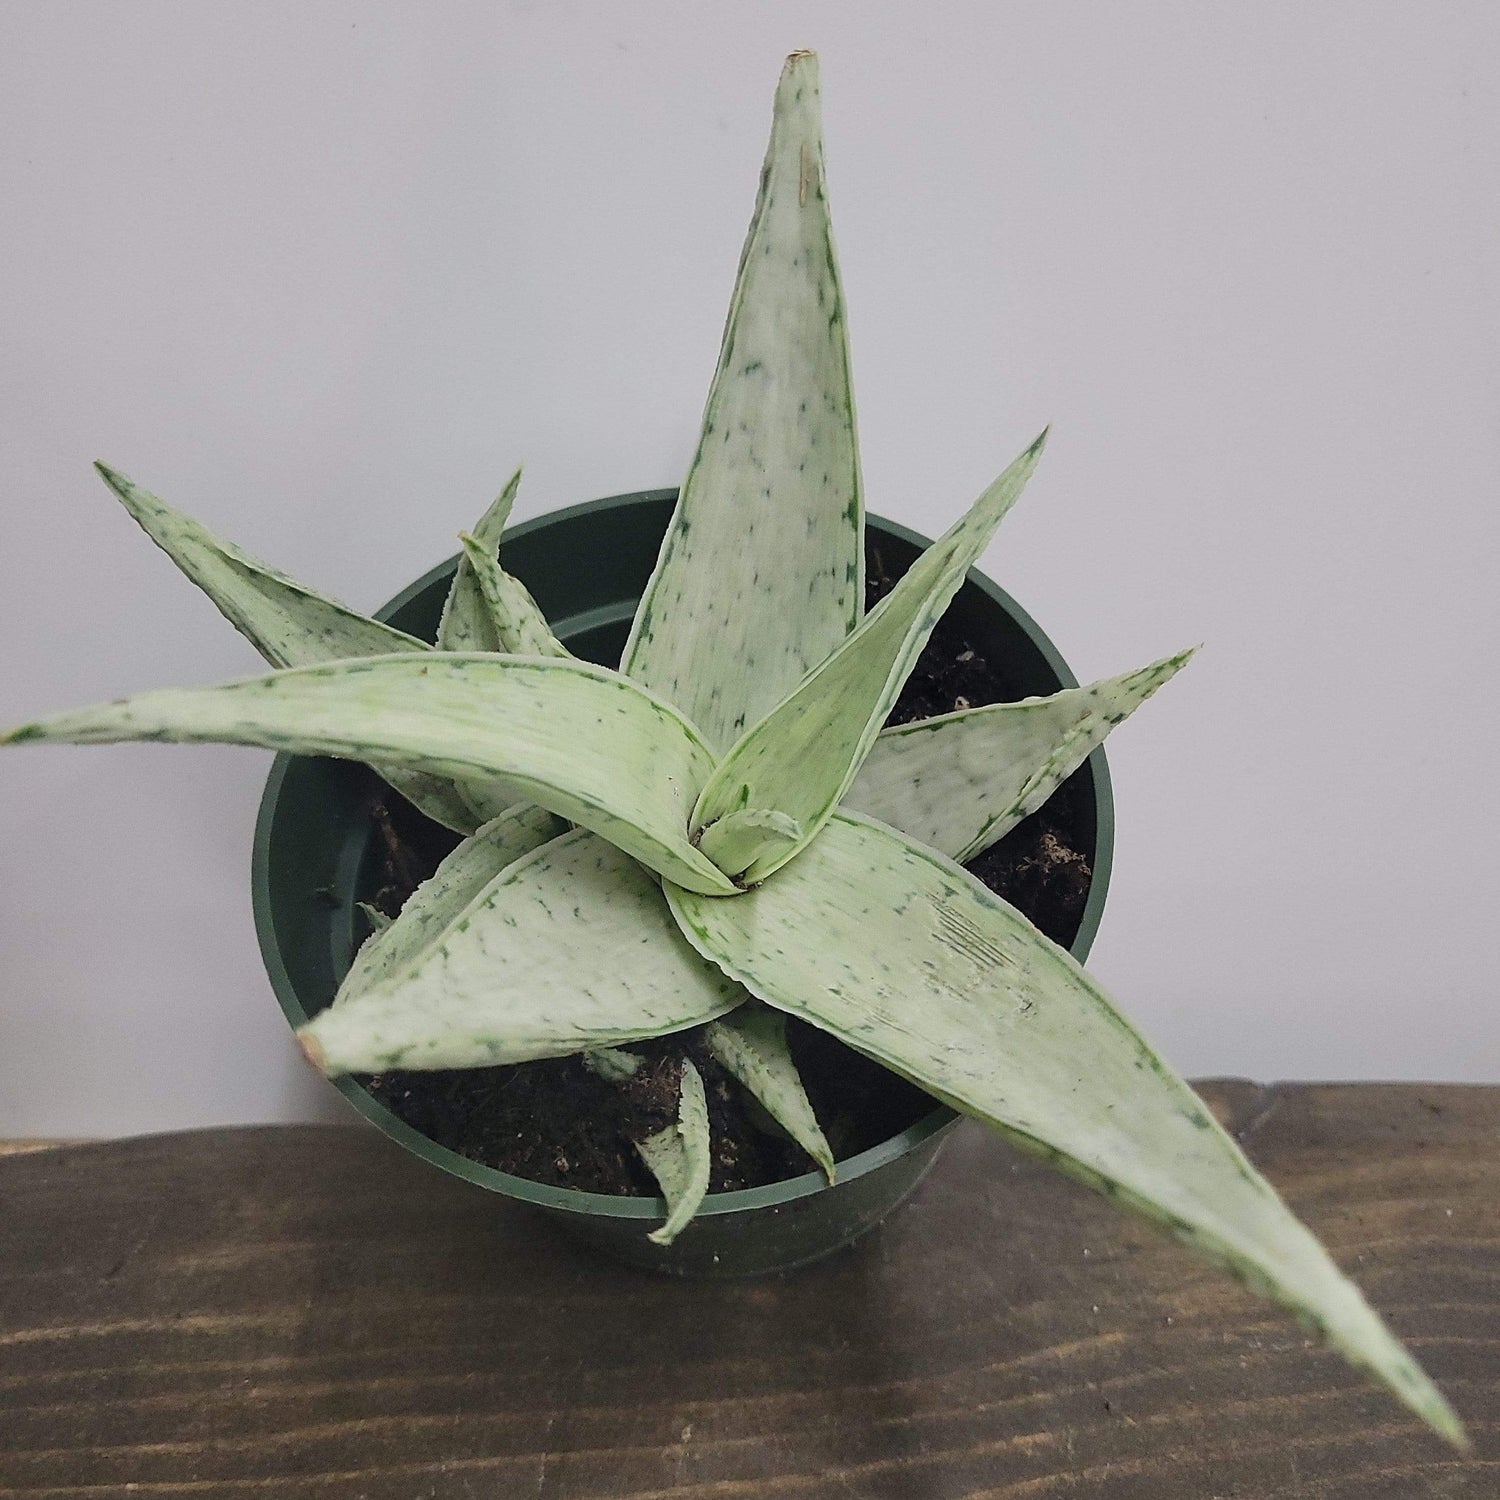 Urban Sprouts Plant 4" in nursery pot Aloe 'Snow Drift'